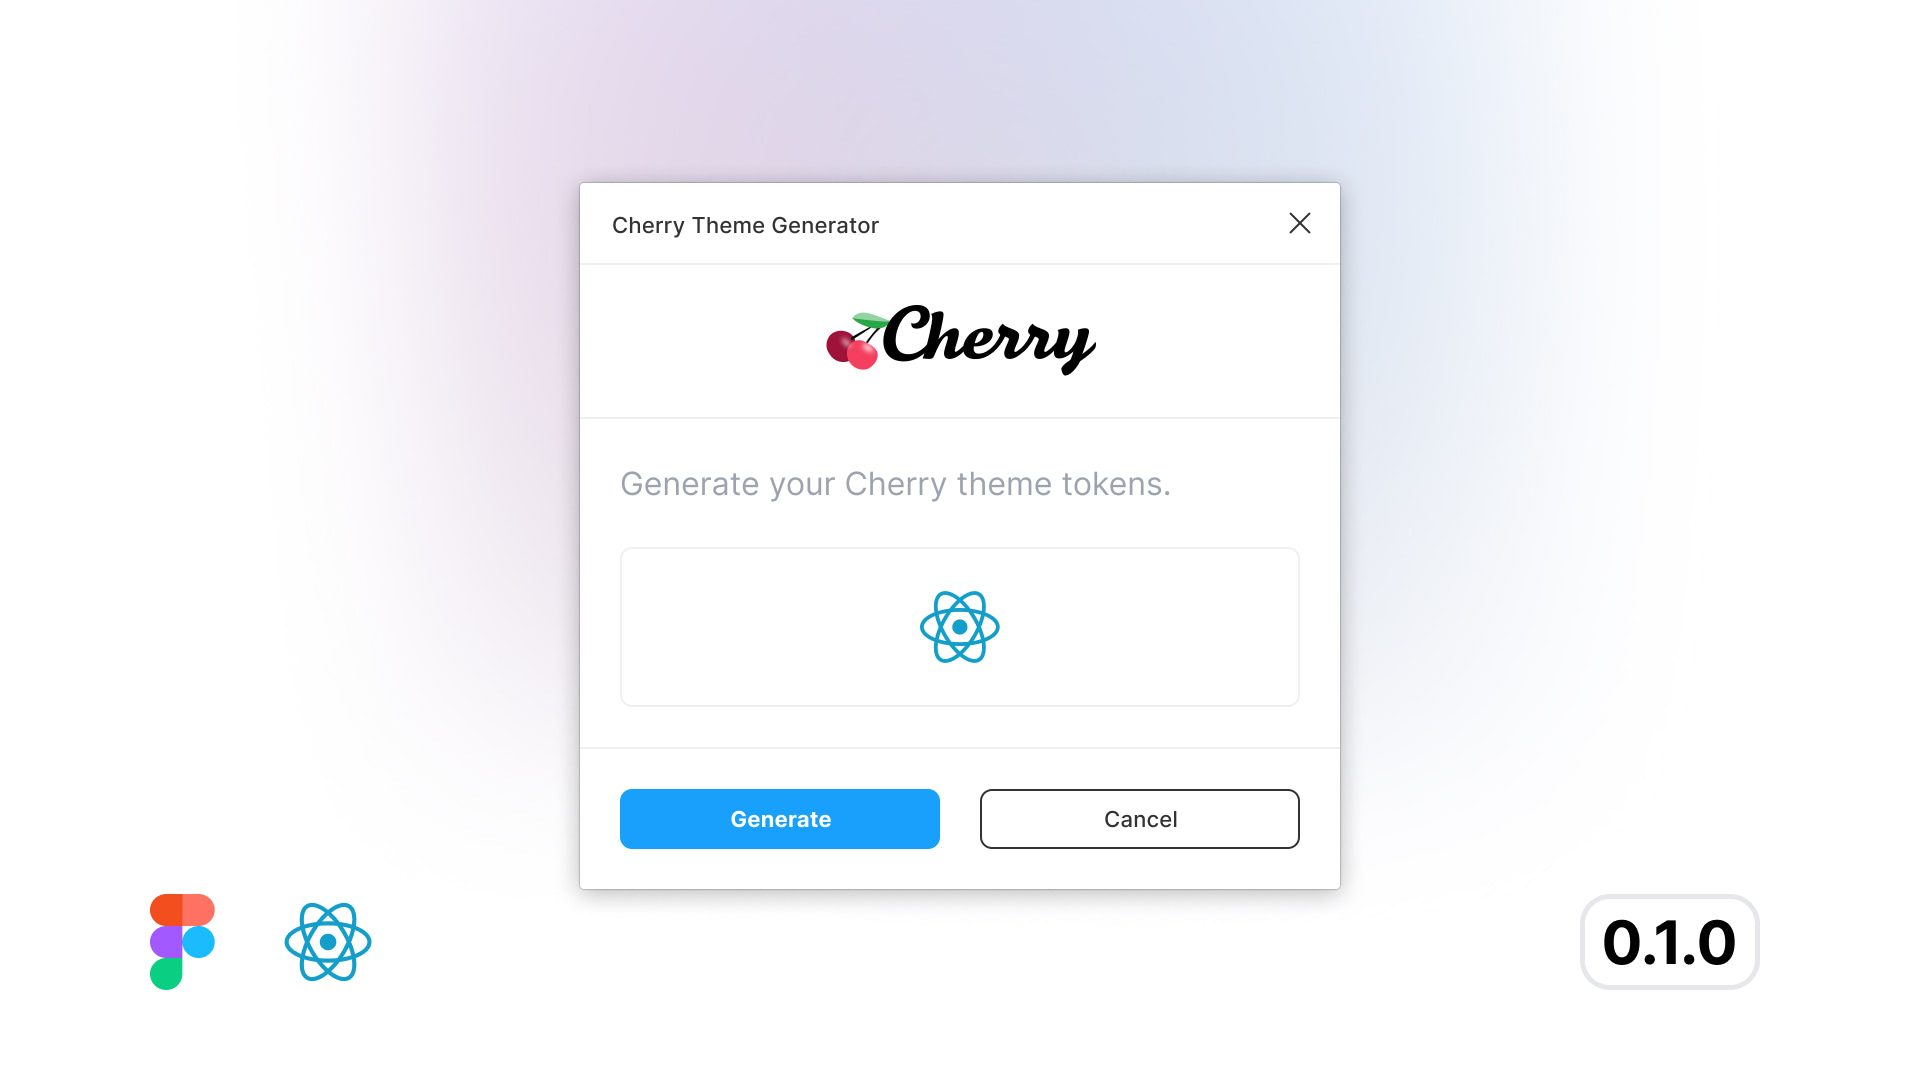 Cherry Theme Generator